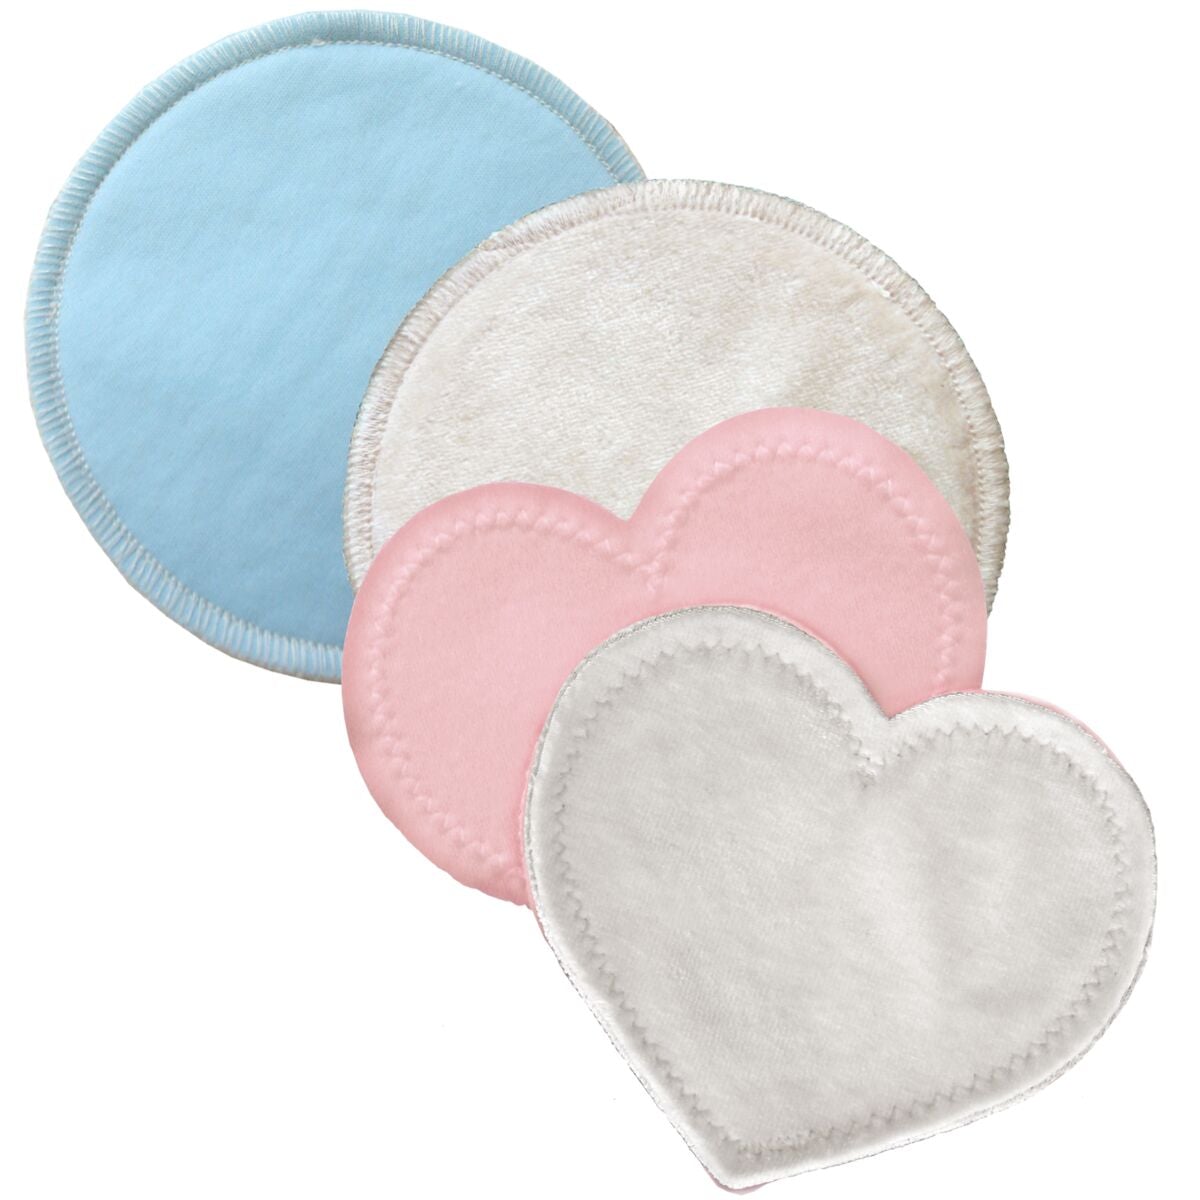 6 12 Pack Reusable Nursing Pads Leak Proof Ultra Soft Washable For  Breastfeeding Moms, Shop Now For Limited-time Deals